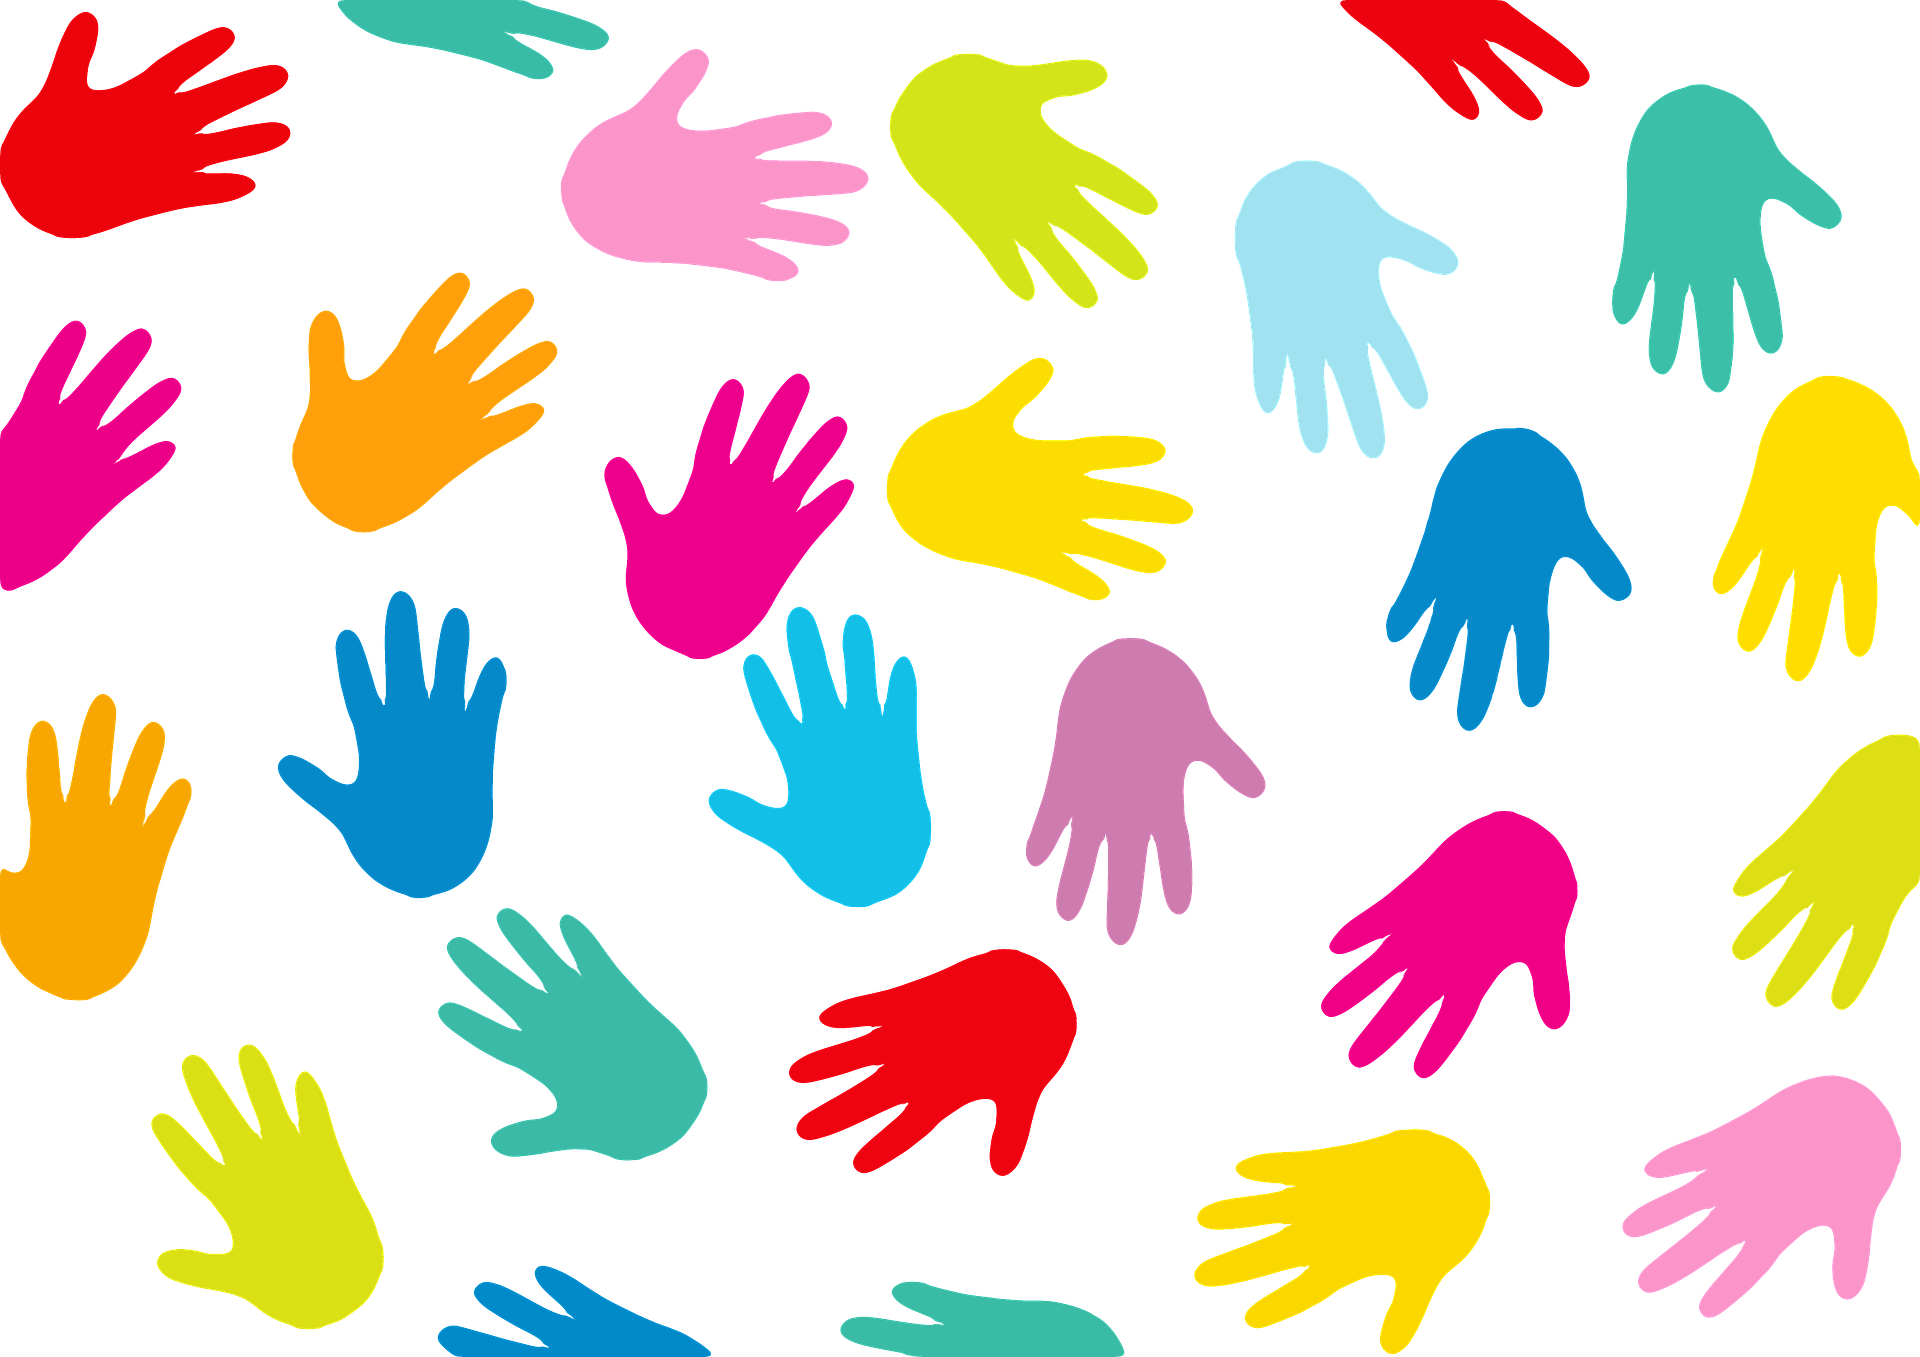 clipart hand diversity